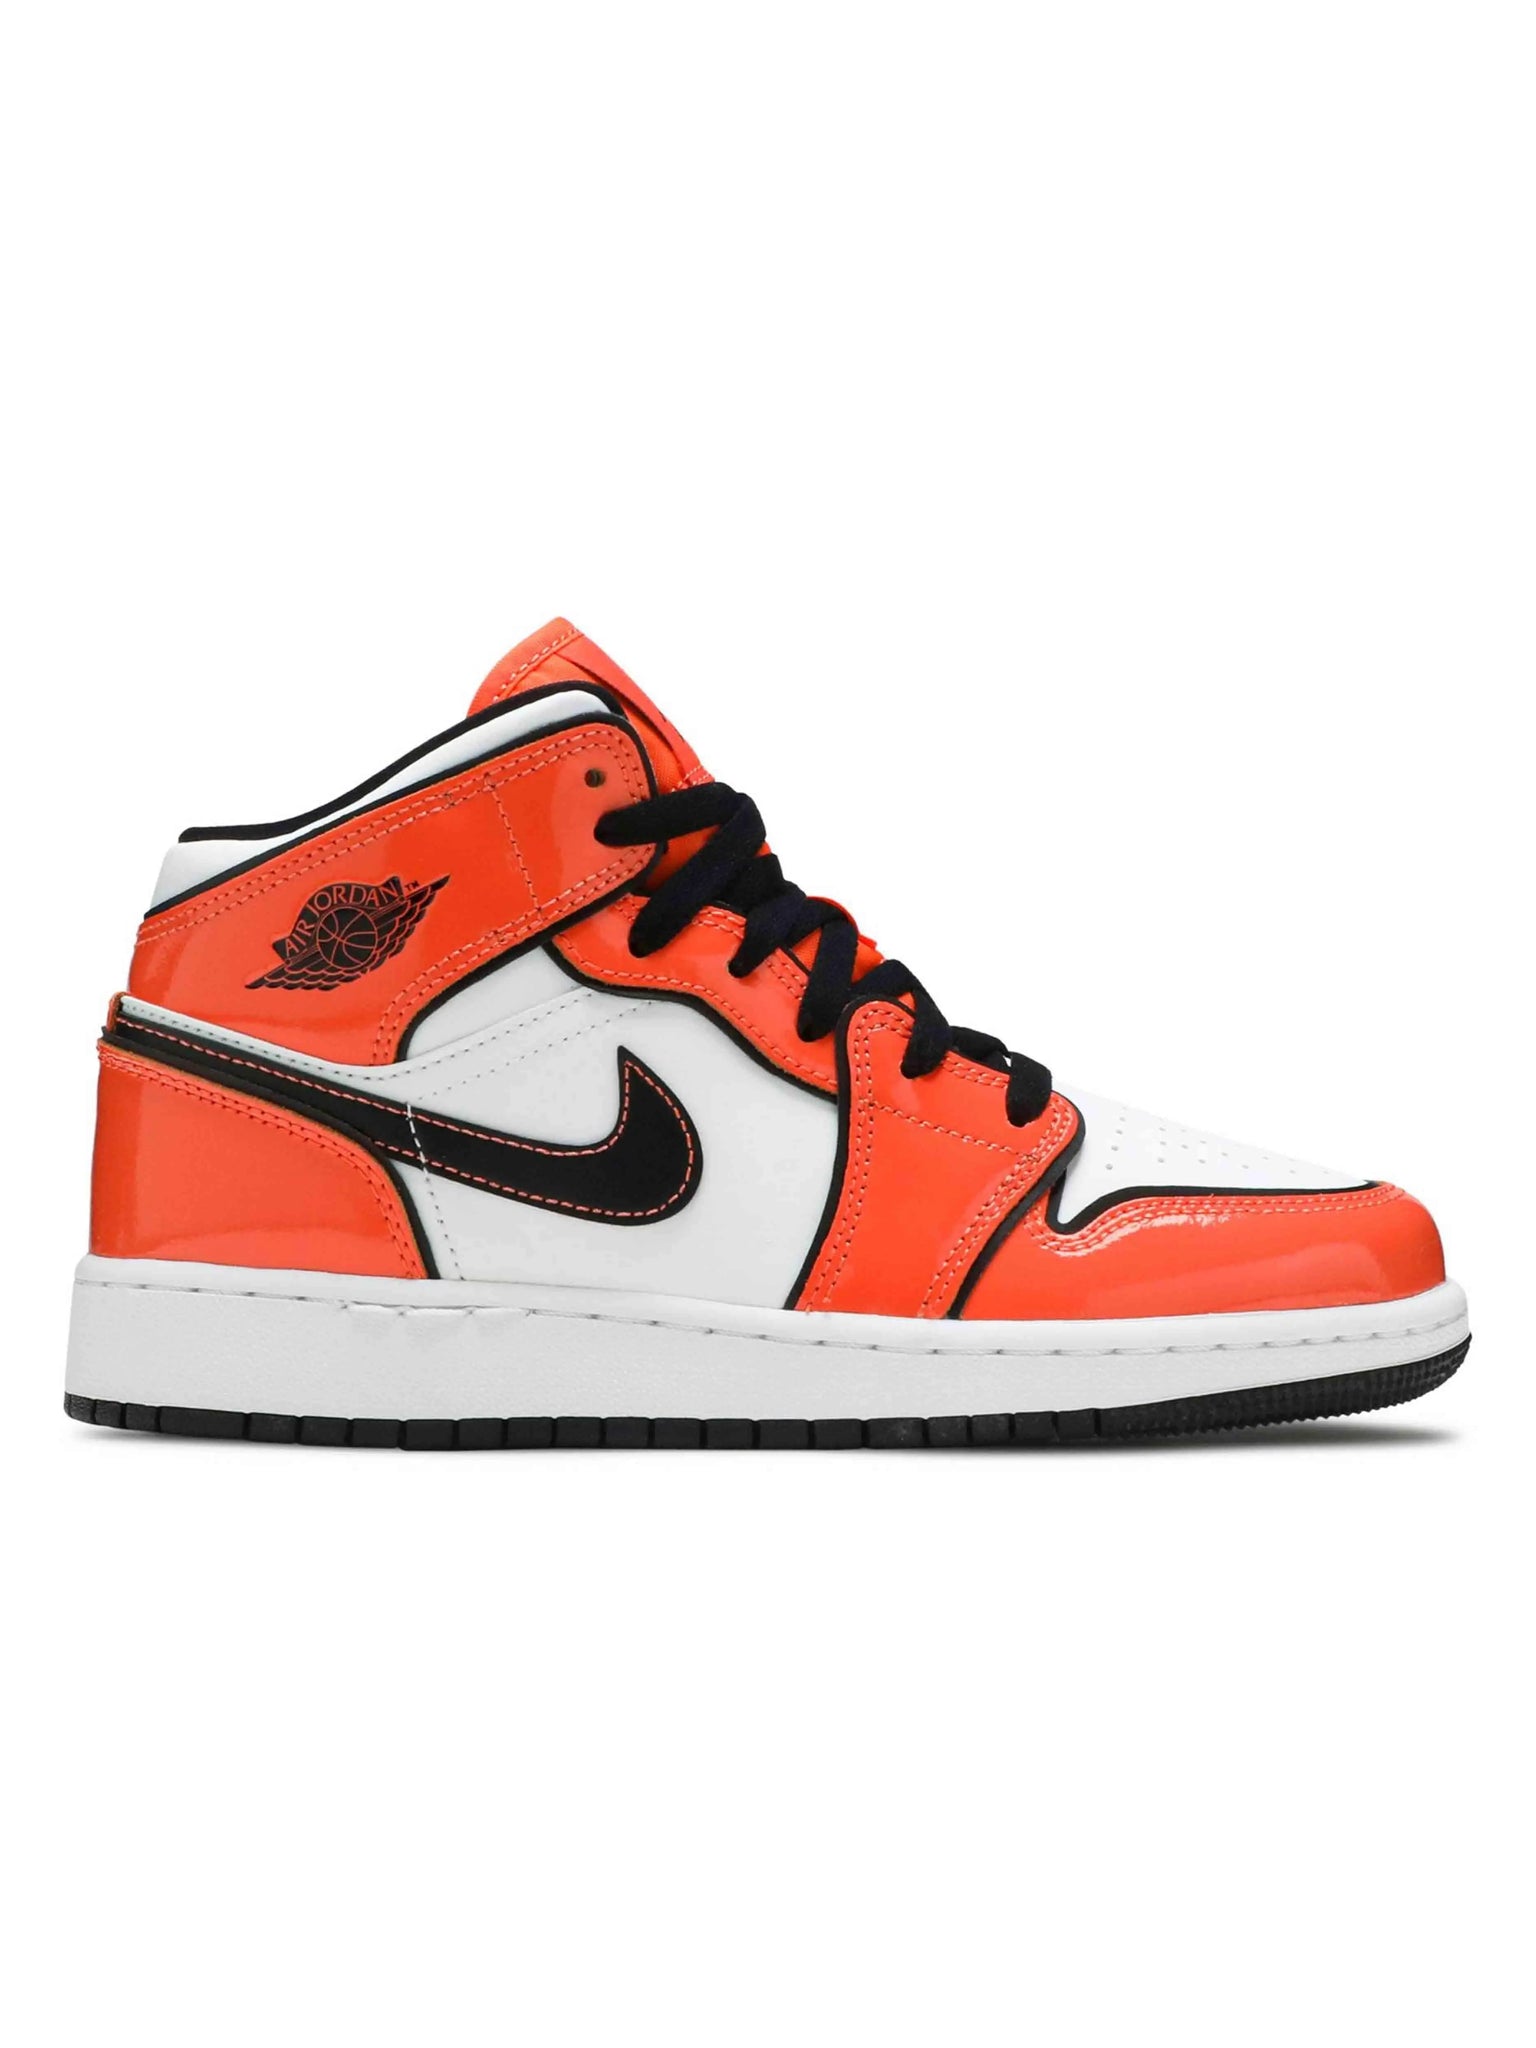 Nike Air Jordan 1 Mid Turf Orange (GS) Prior